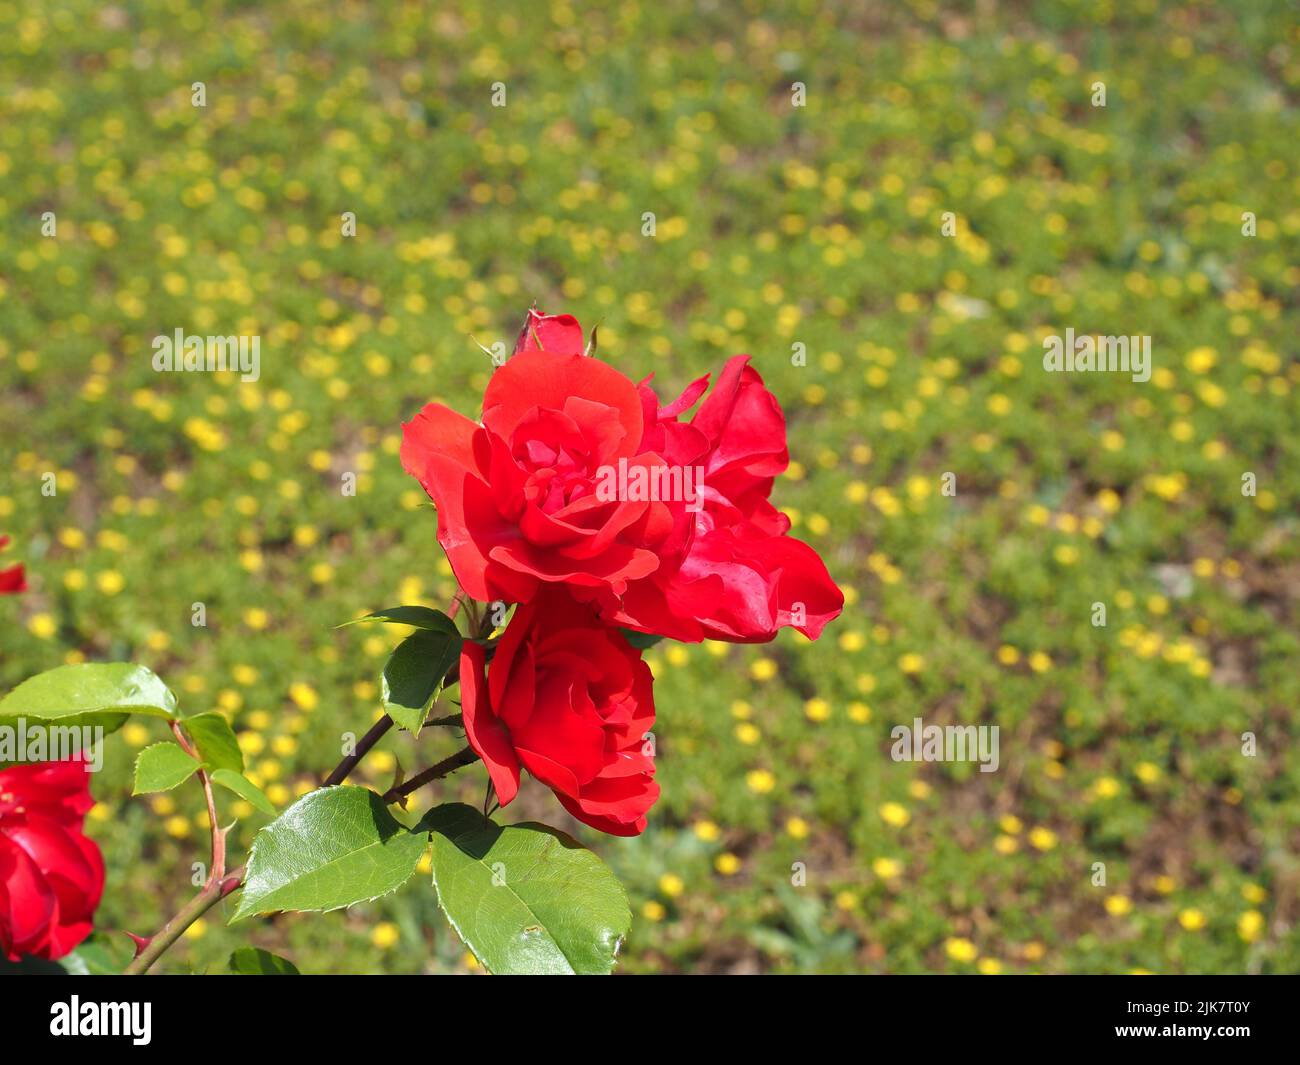 rose perennial shrub red flower scientific name Rosa Stock Photo